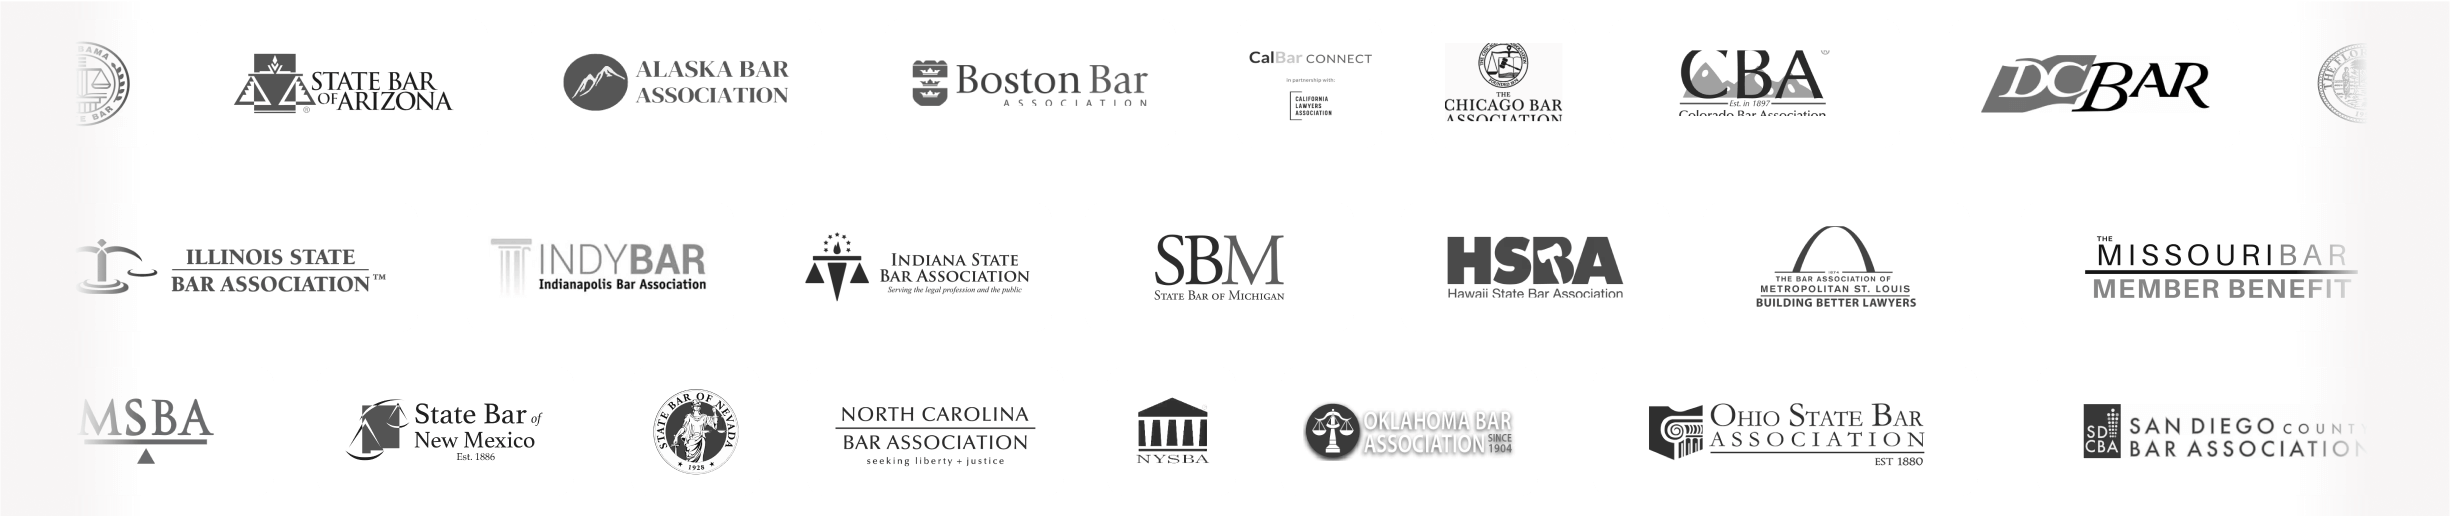 US Bar Associations logos